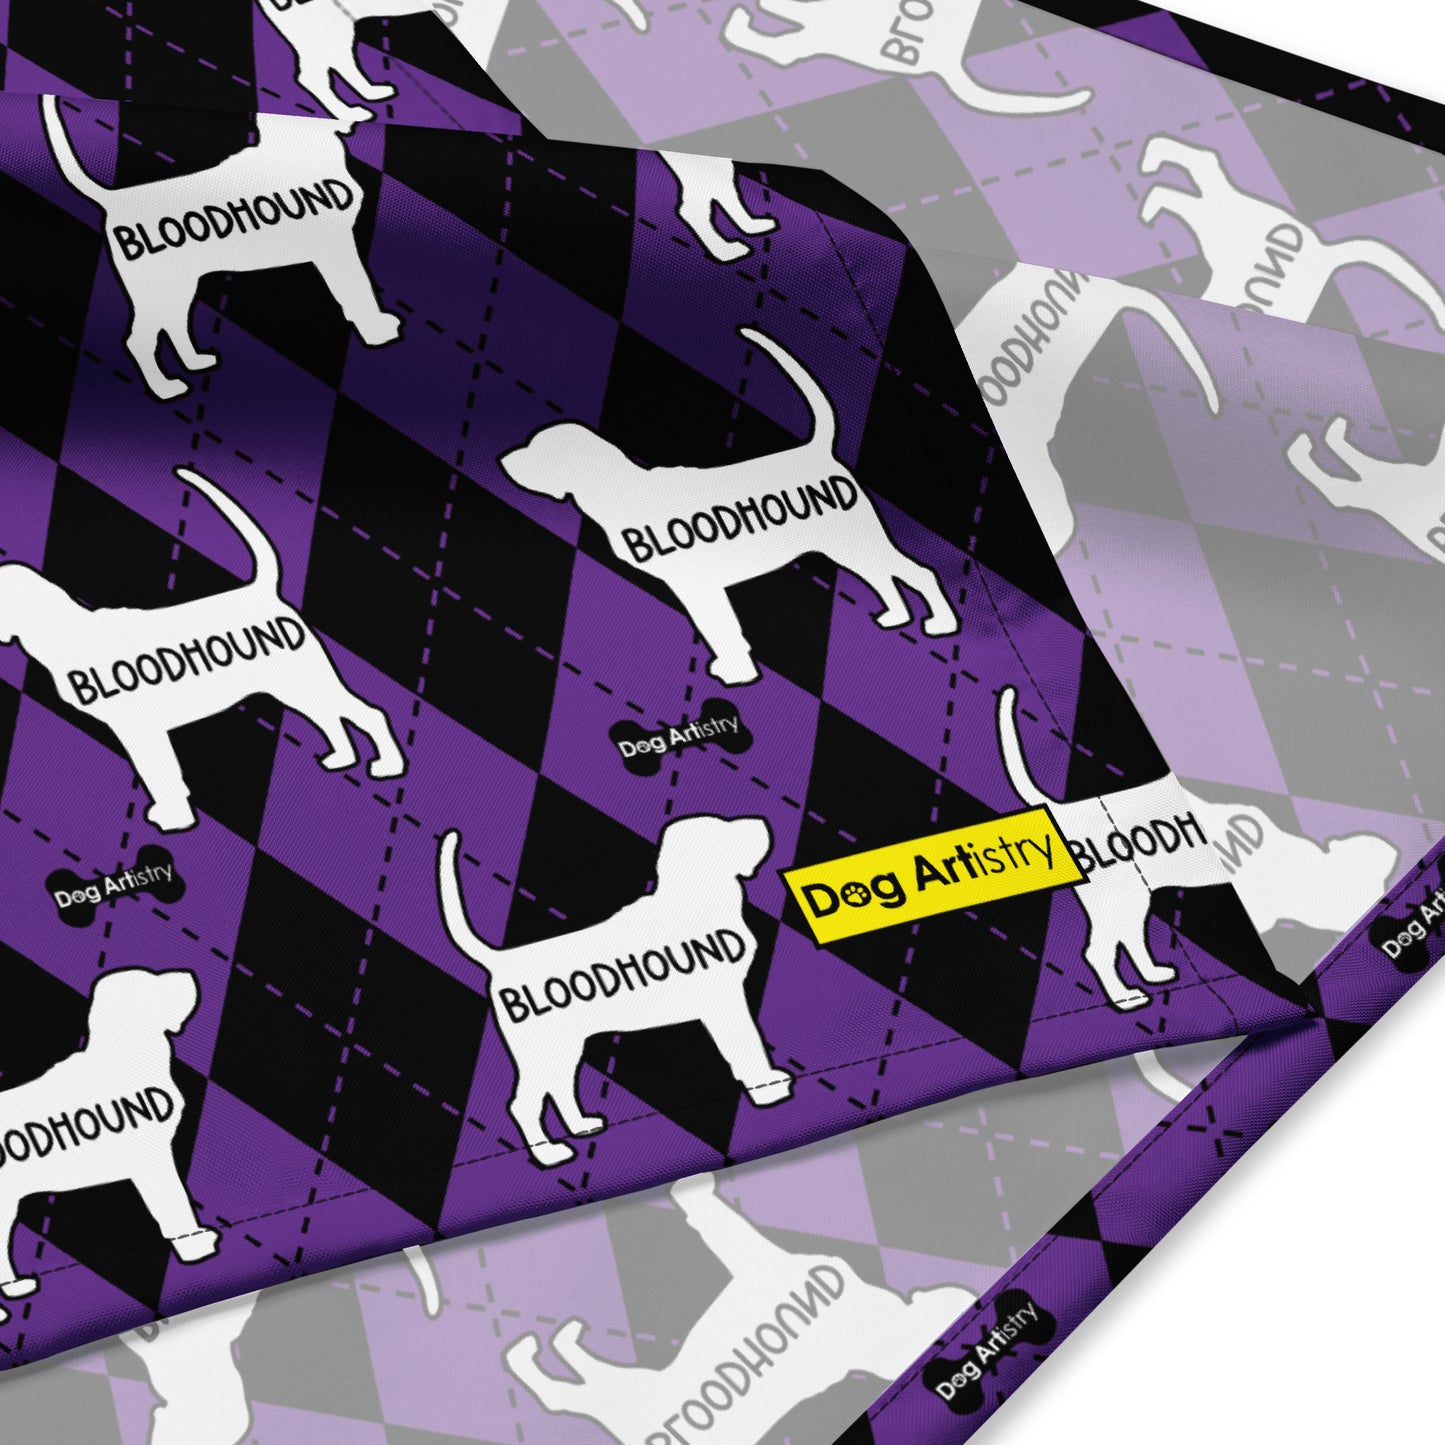 Bloodhound Argyle Purple and Black All-over print bandana